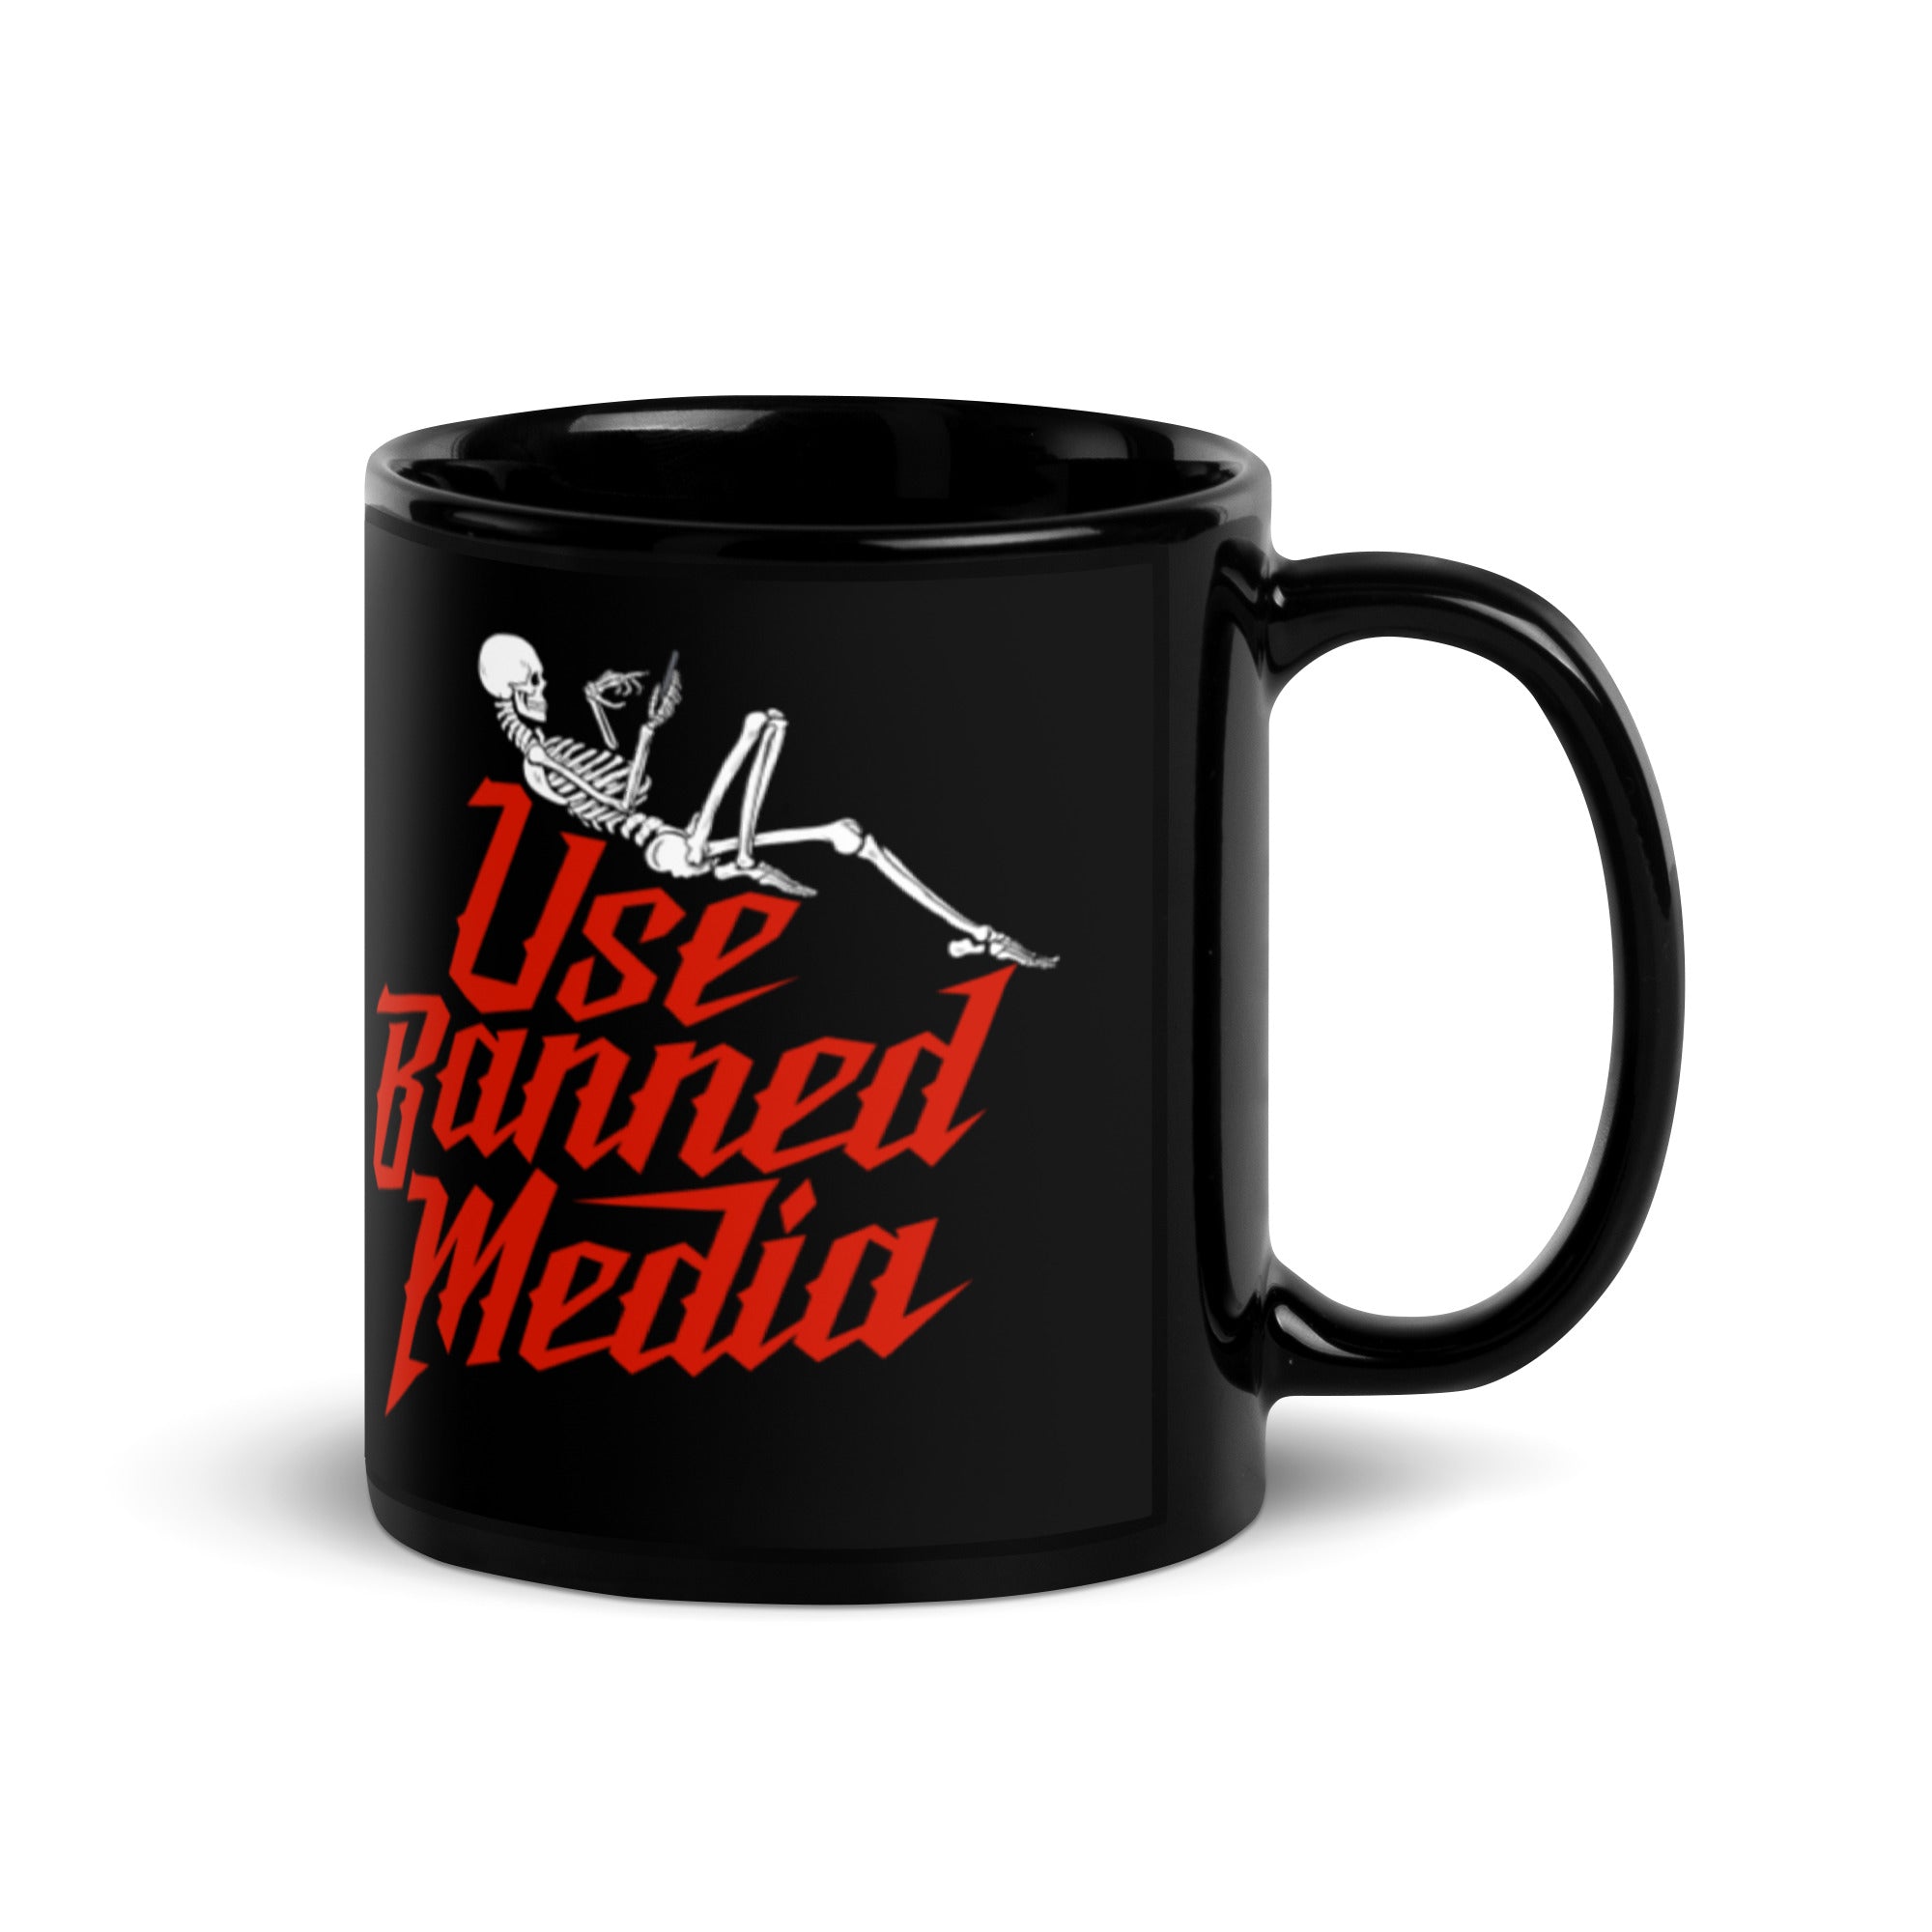 Use Banned Media Coffee Mug